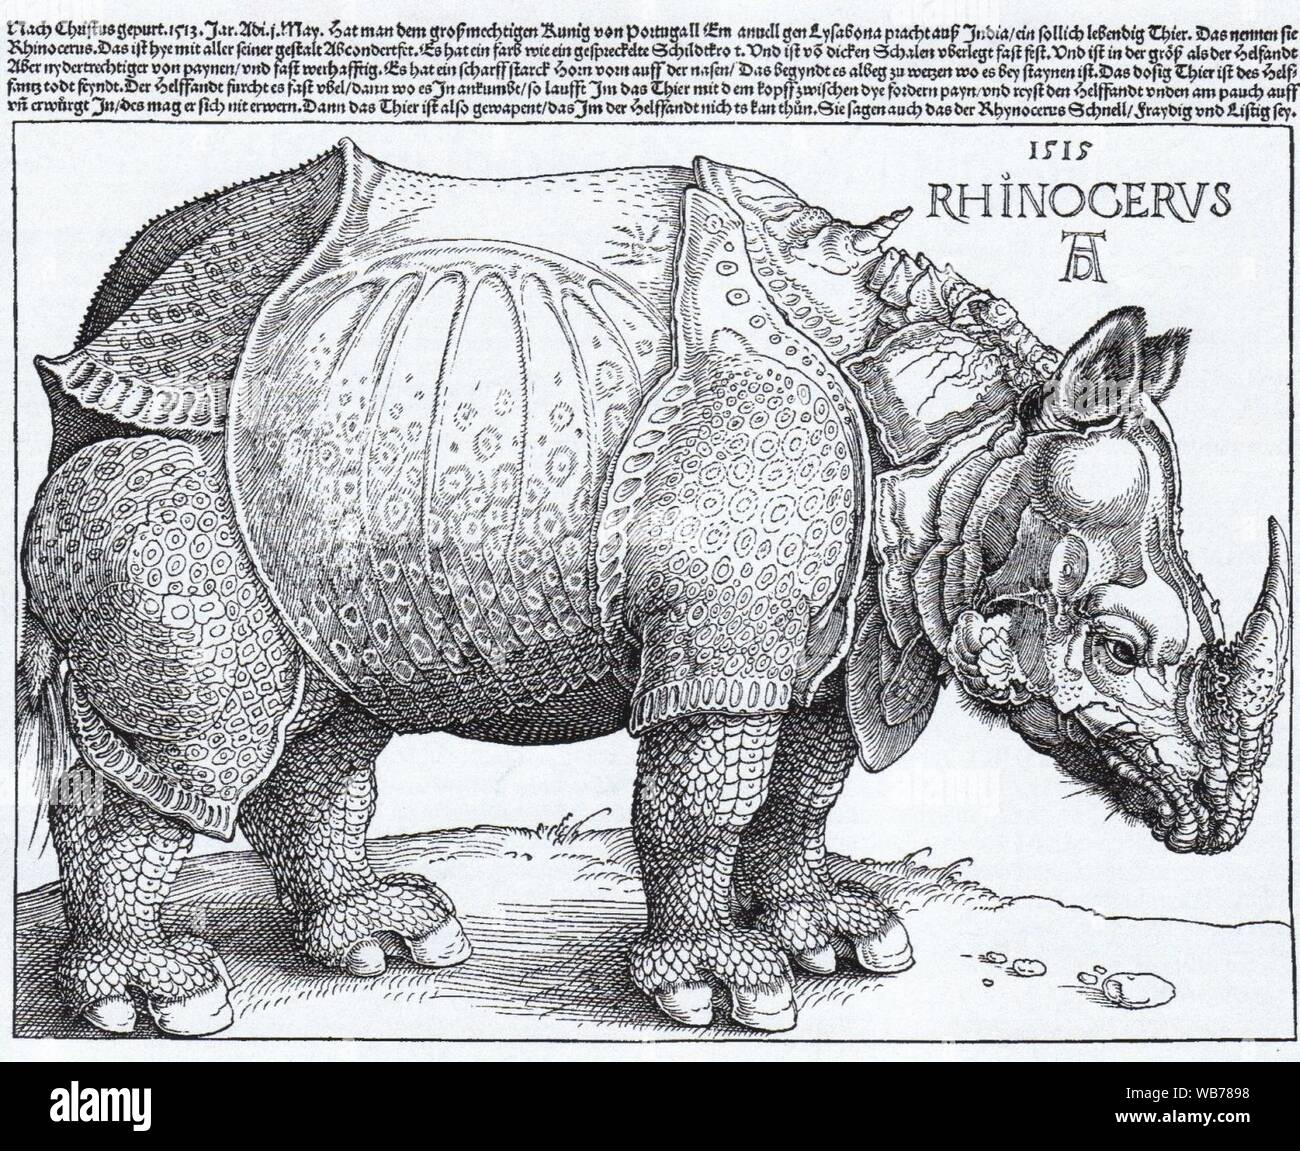 Rhinocerus xilografia (1515) Albrecht Dürer. Foto Stock